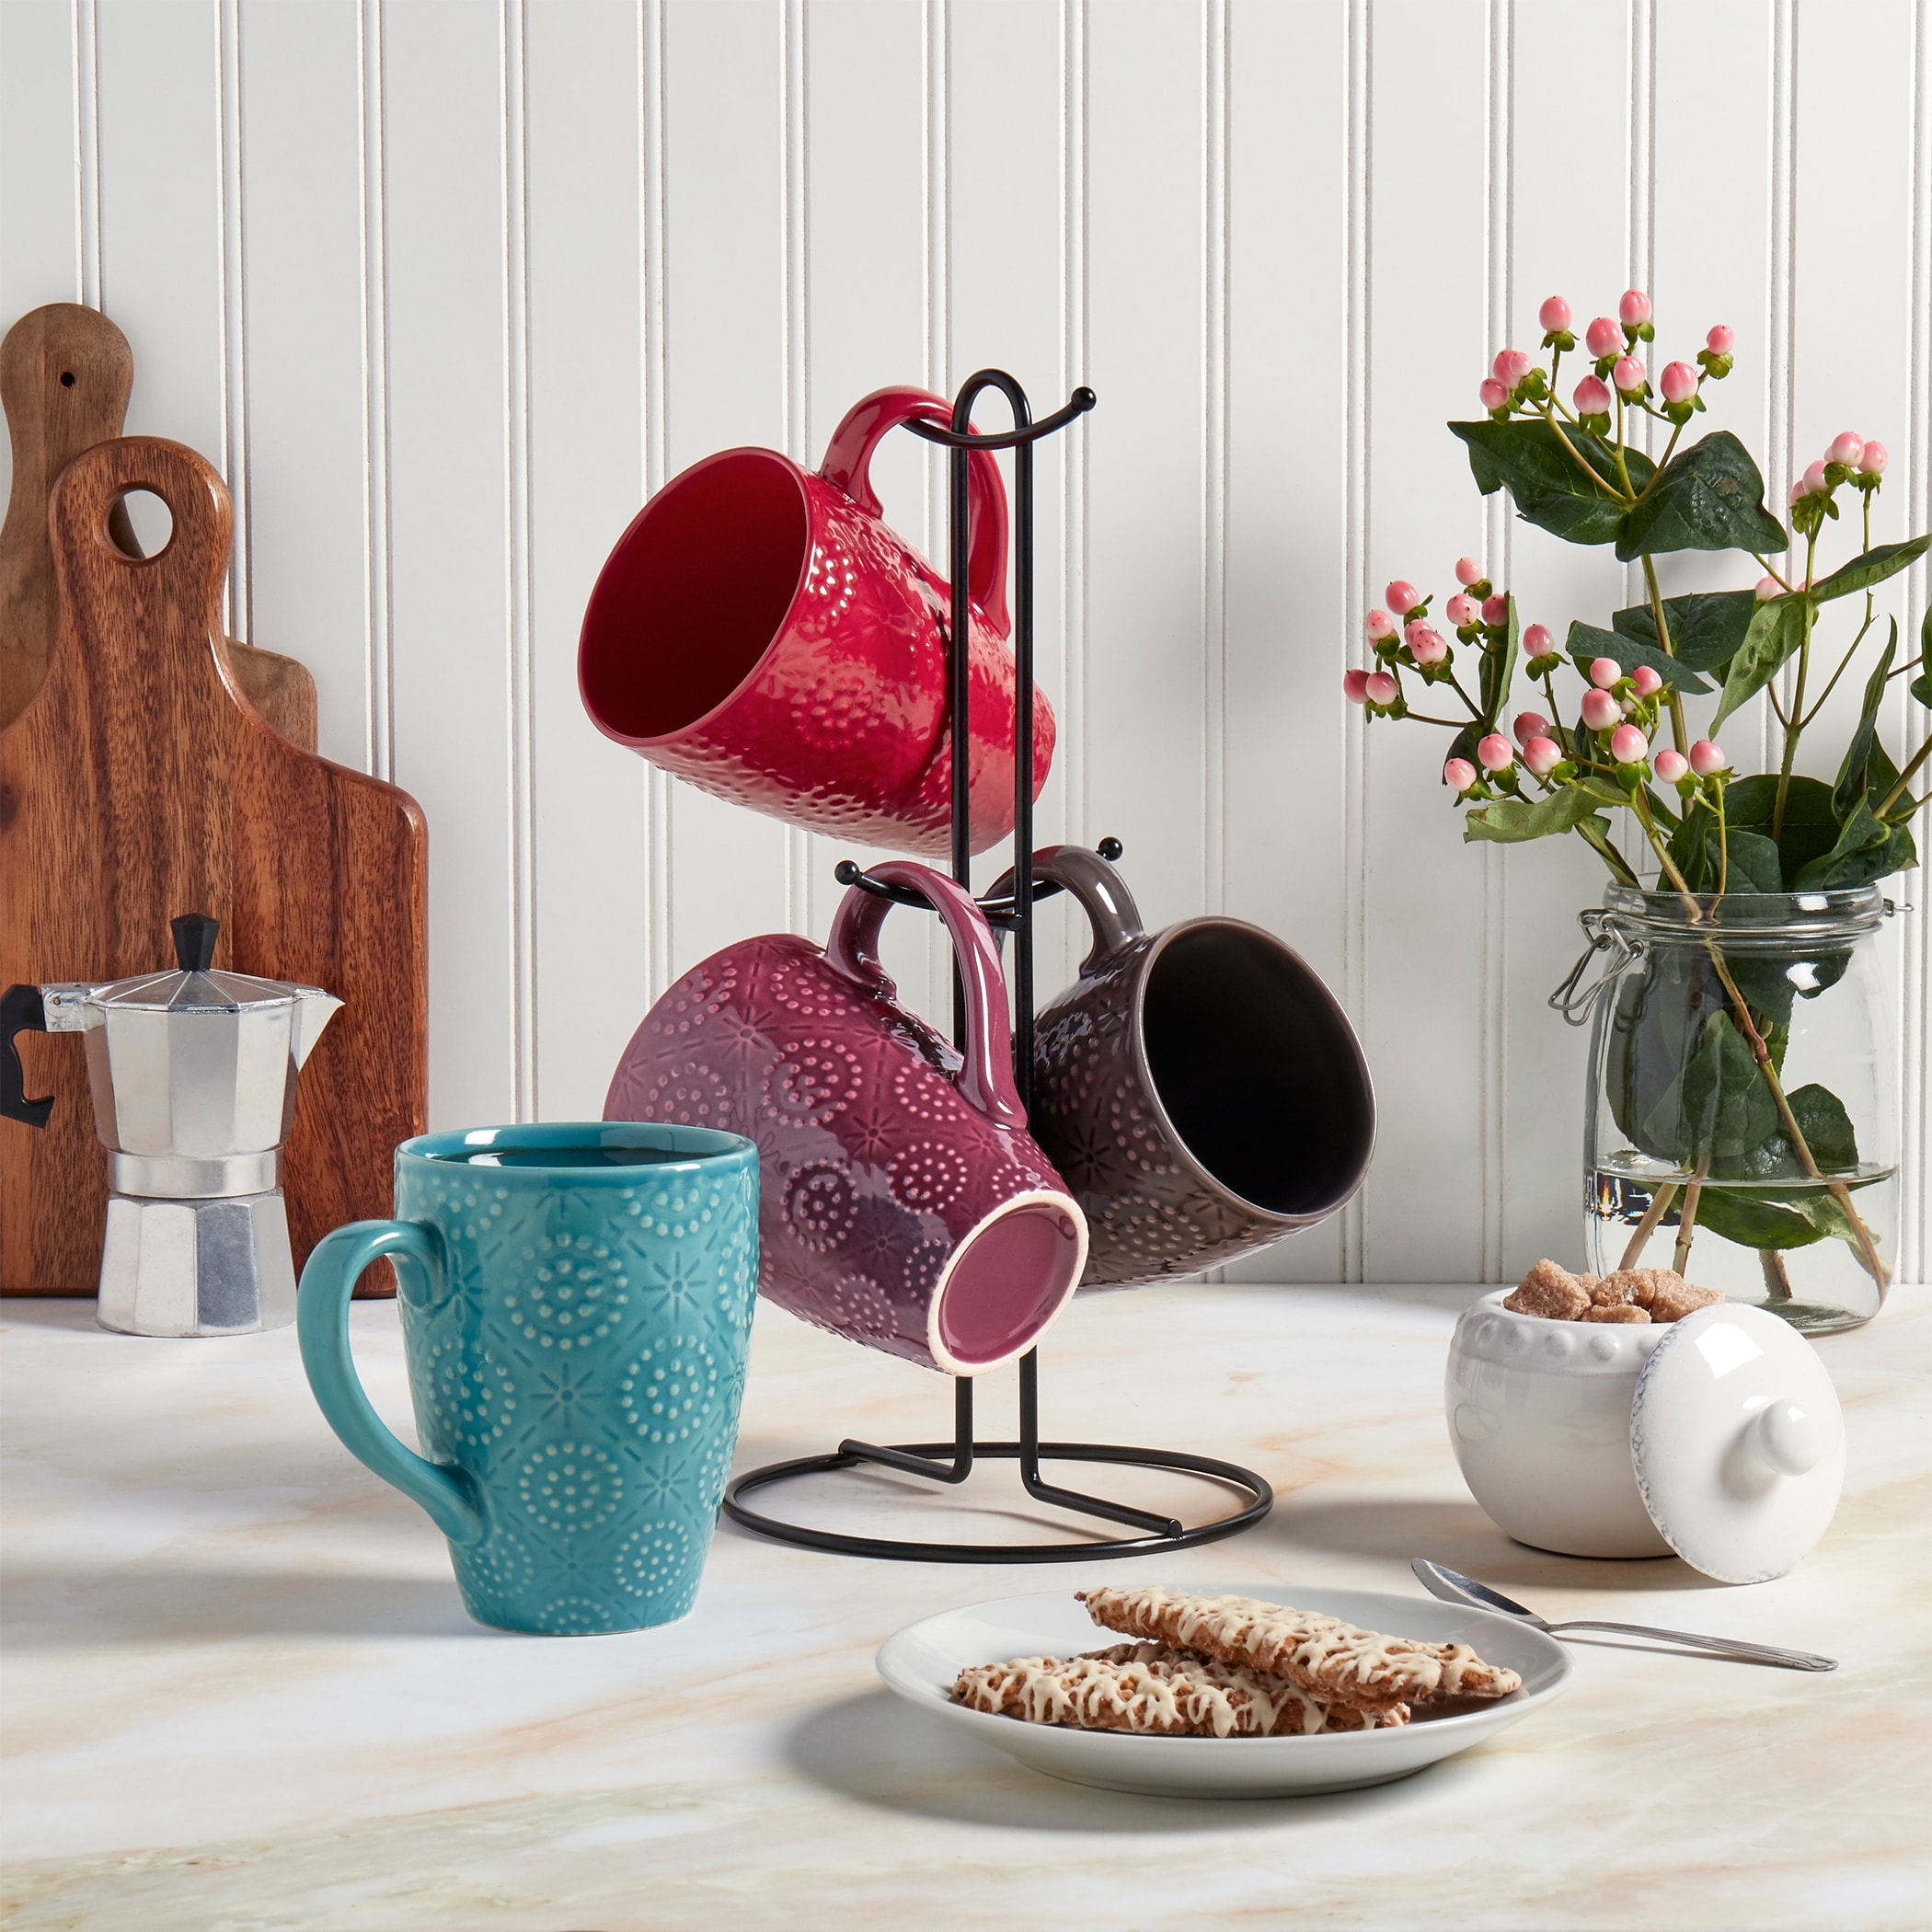 Tabletops Avenue 4-Piece Assorted Coffee Mug Set with Tree Rack